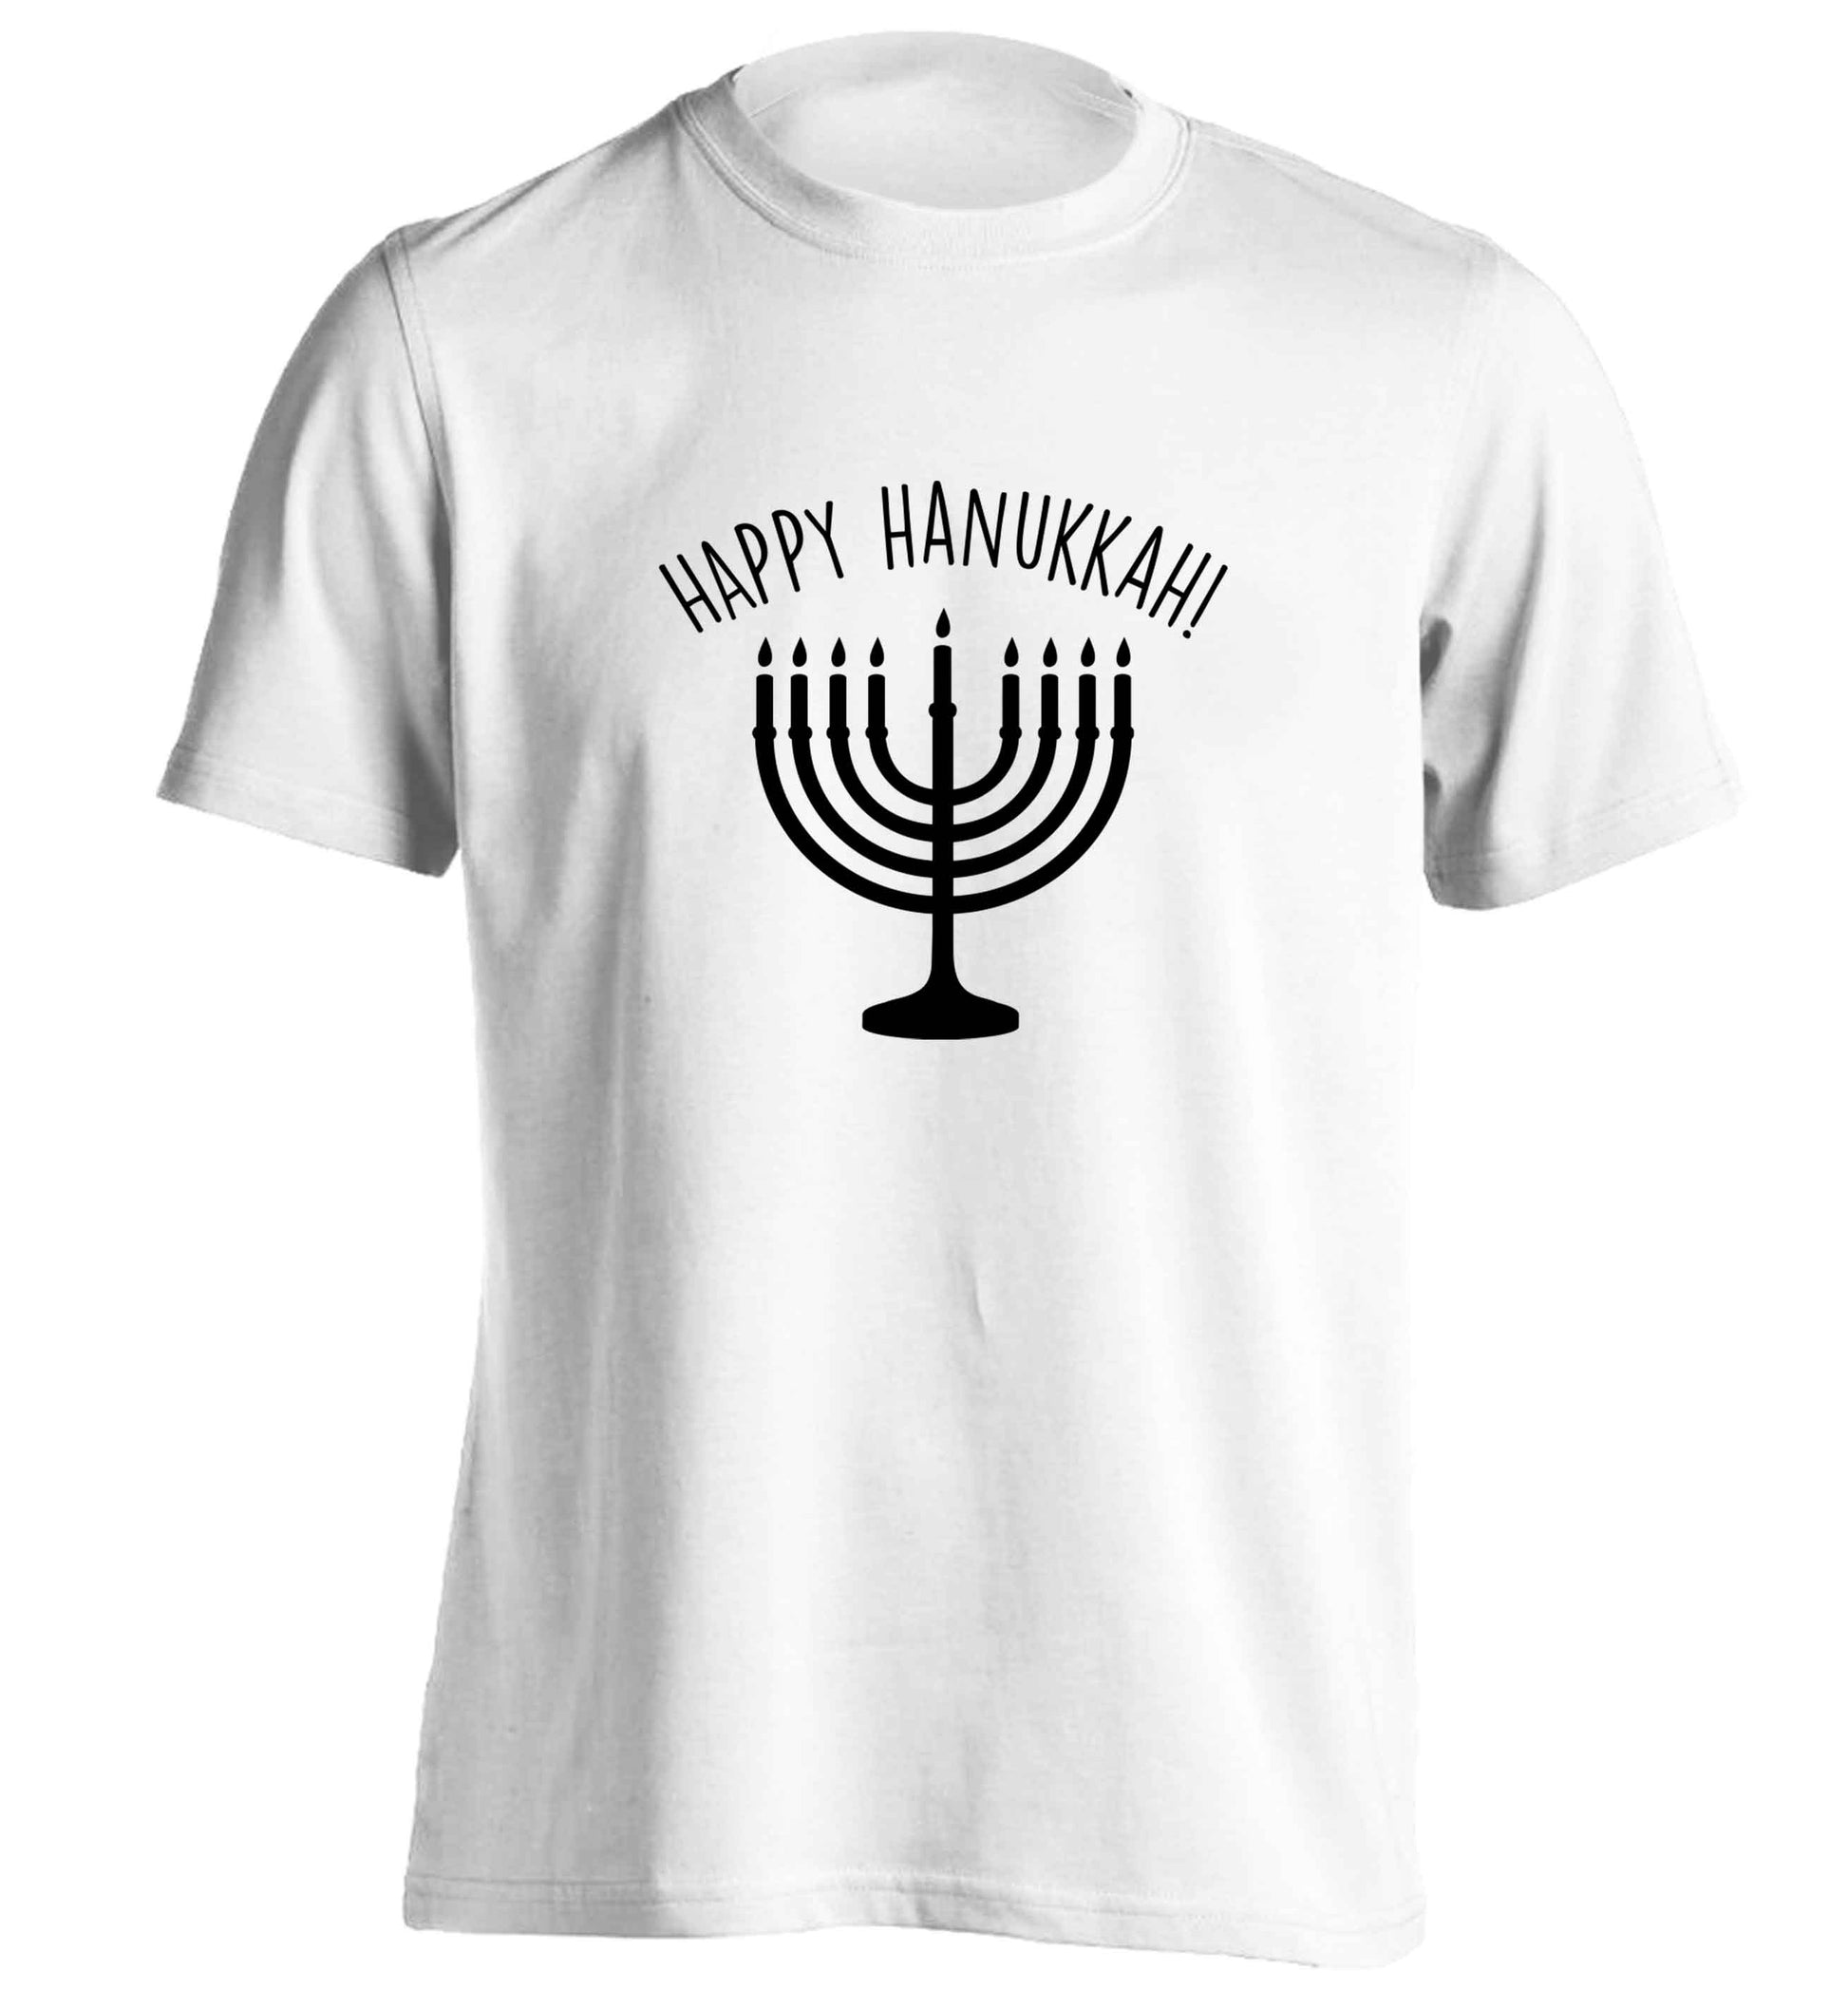 Happy hanukkah adults unisex white Tshirt 2XL